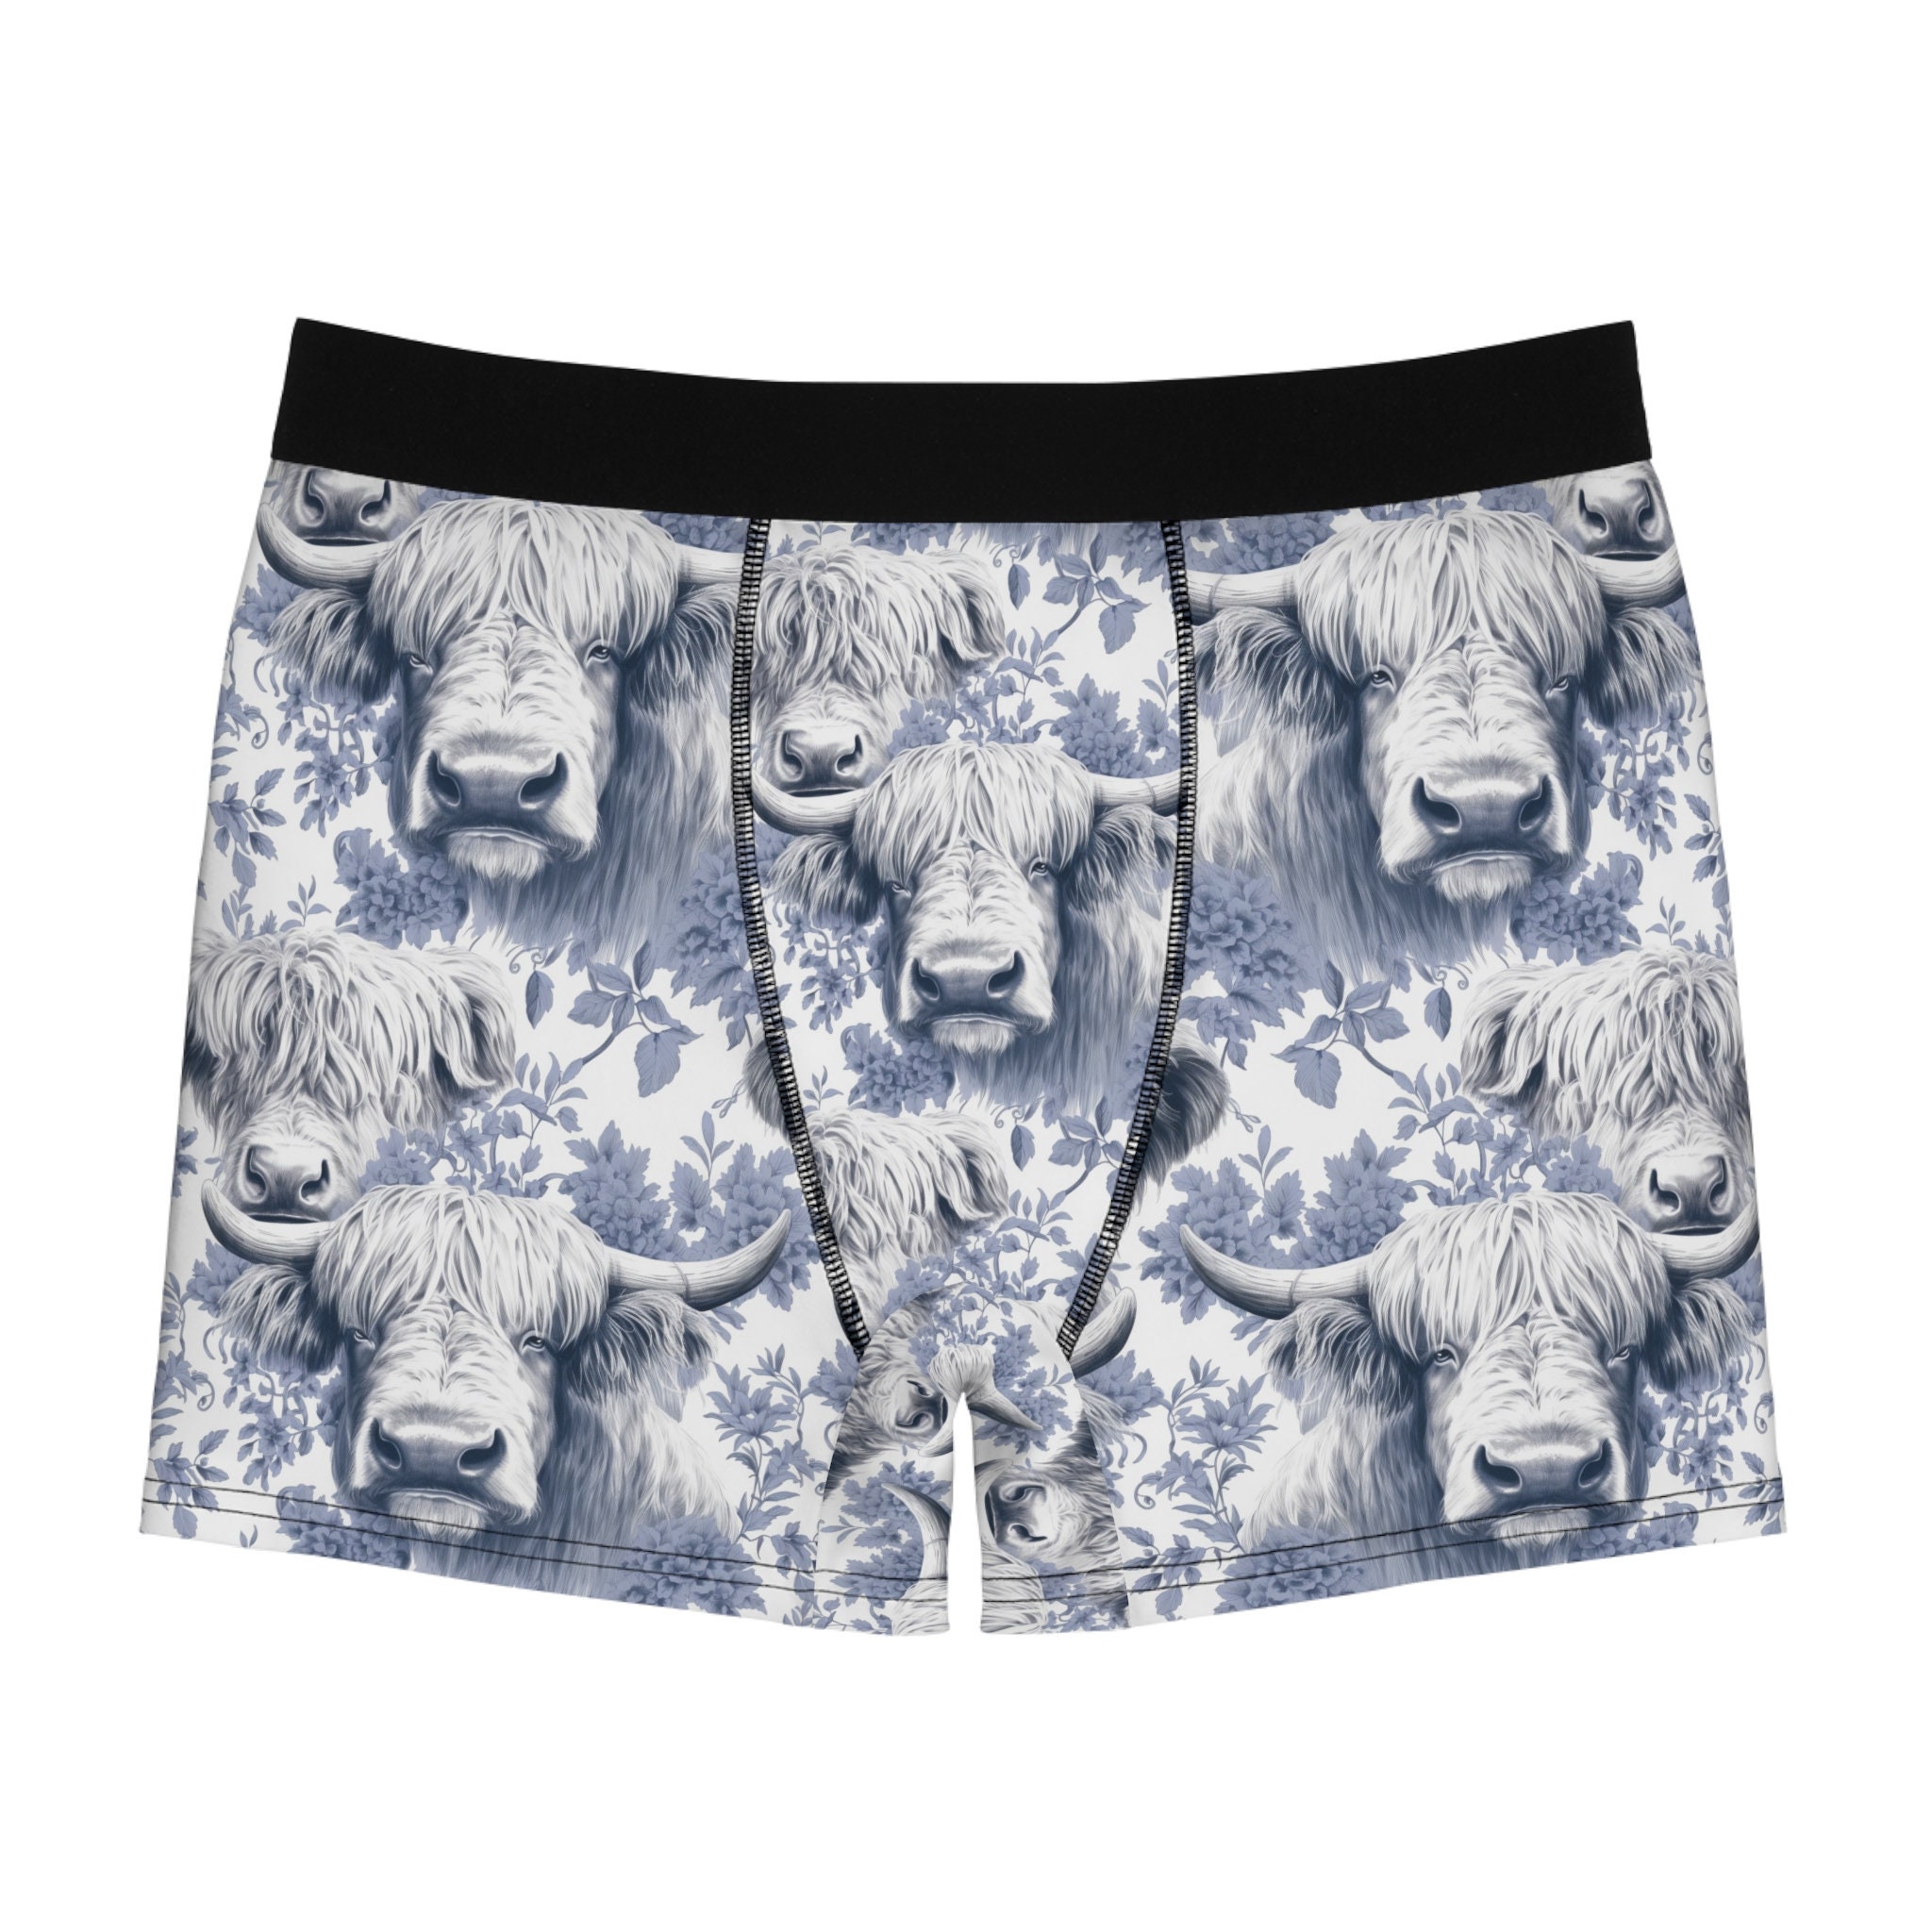 4/1x Men's Briefs Shorts Panties Boxers Elephant Nose Trunks Ice Silk  Underwears